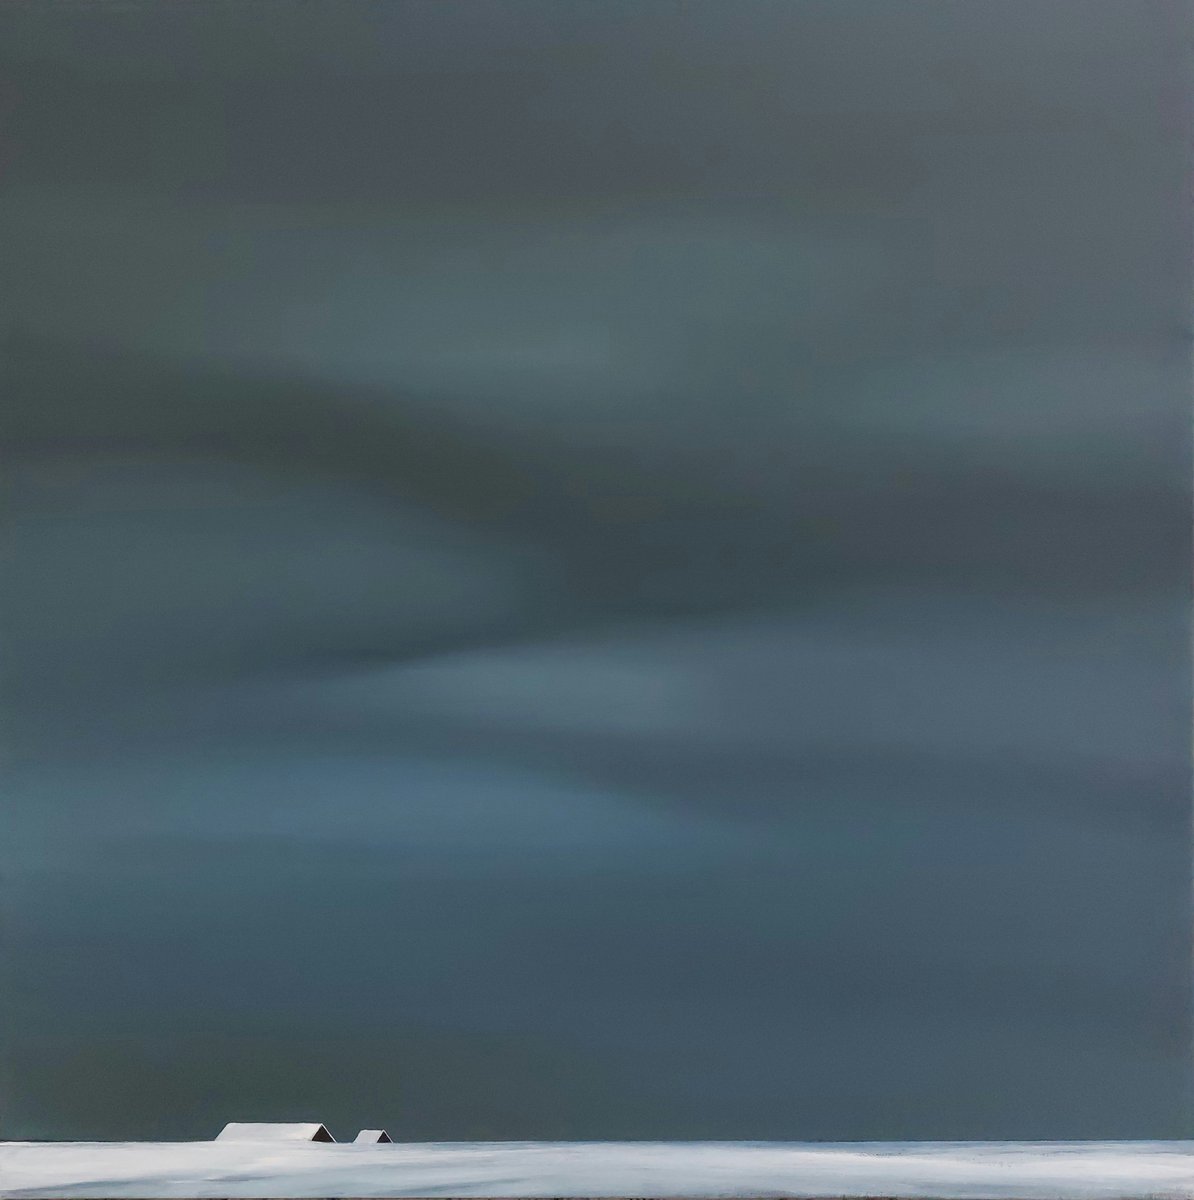 The silence of snow by Nelly van Nieuwenhuijzen